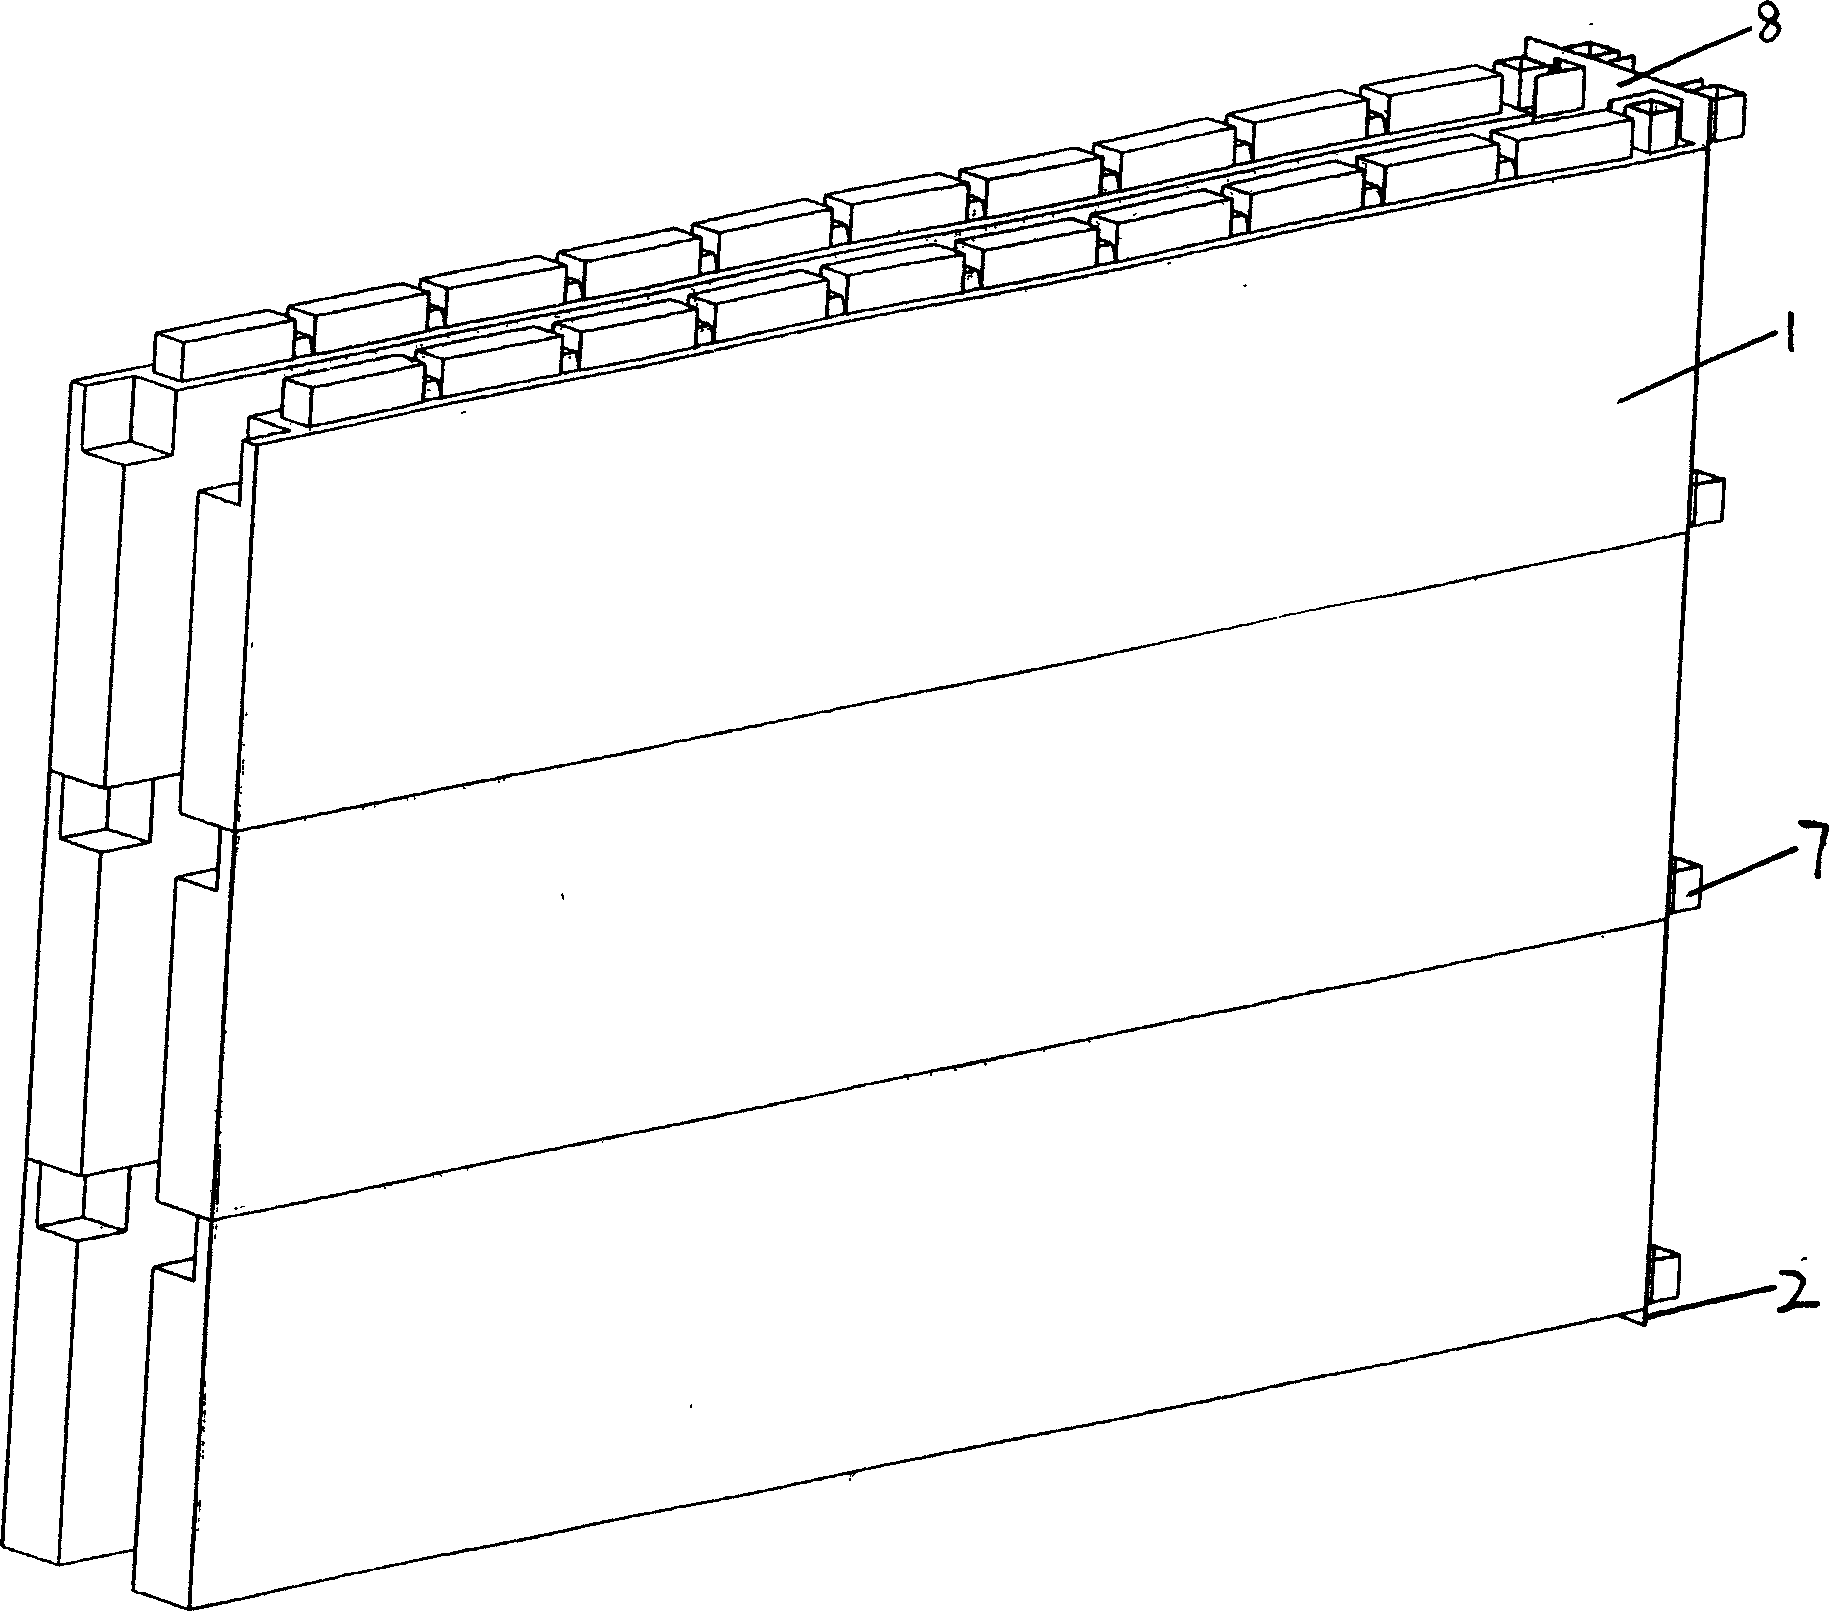 Bar mortice-tenon block assembling wall and construction method